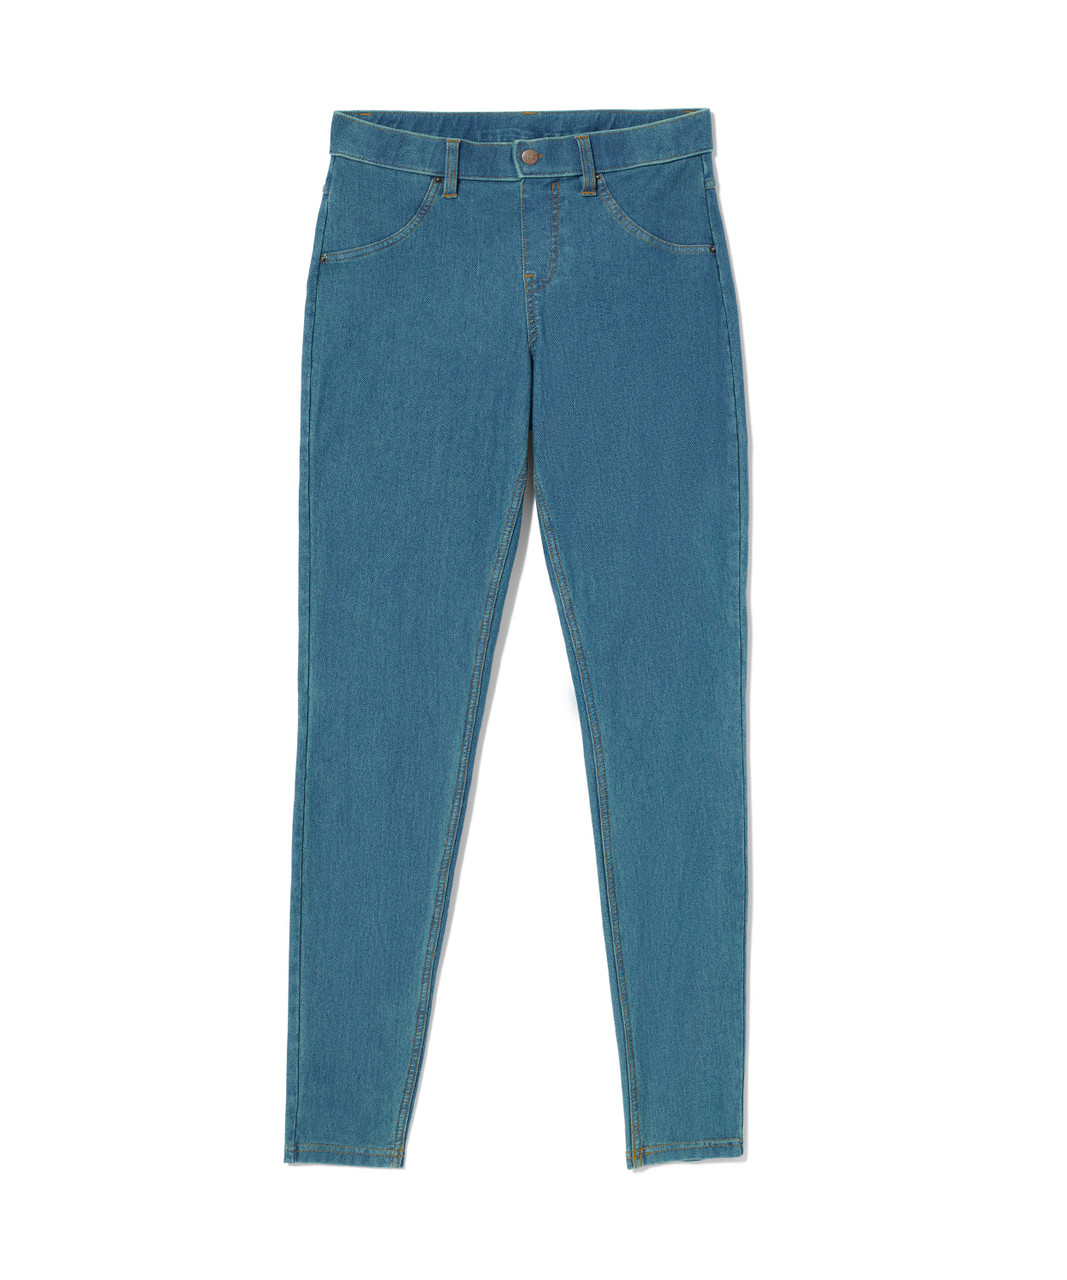 HUE, Jeans, Hue Zest Yellow Essential Denim Capri Leggings Sz Small U8756  Ankle Slit